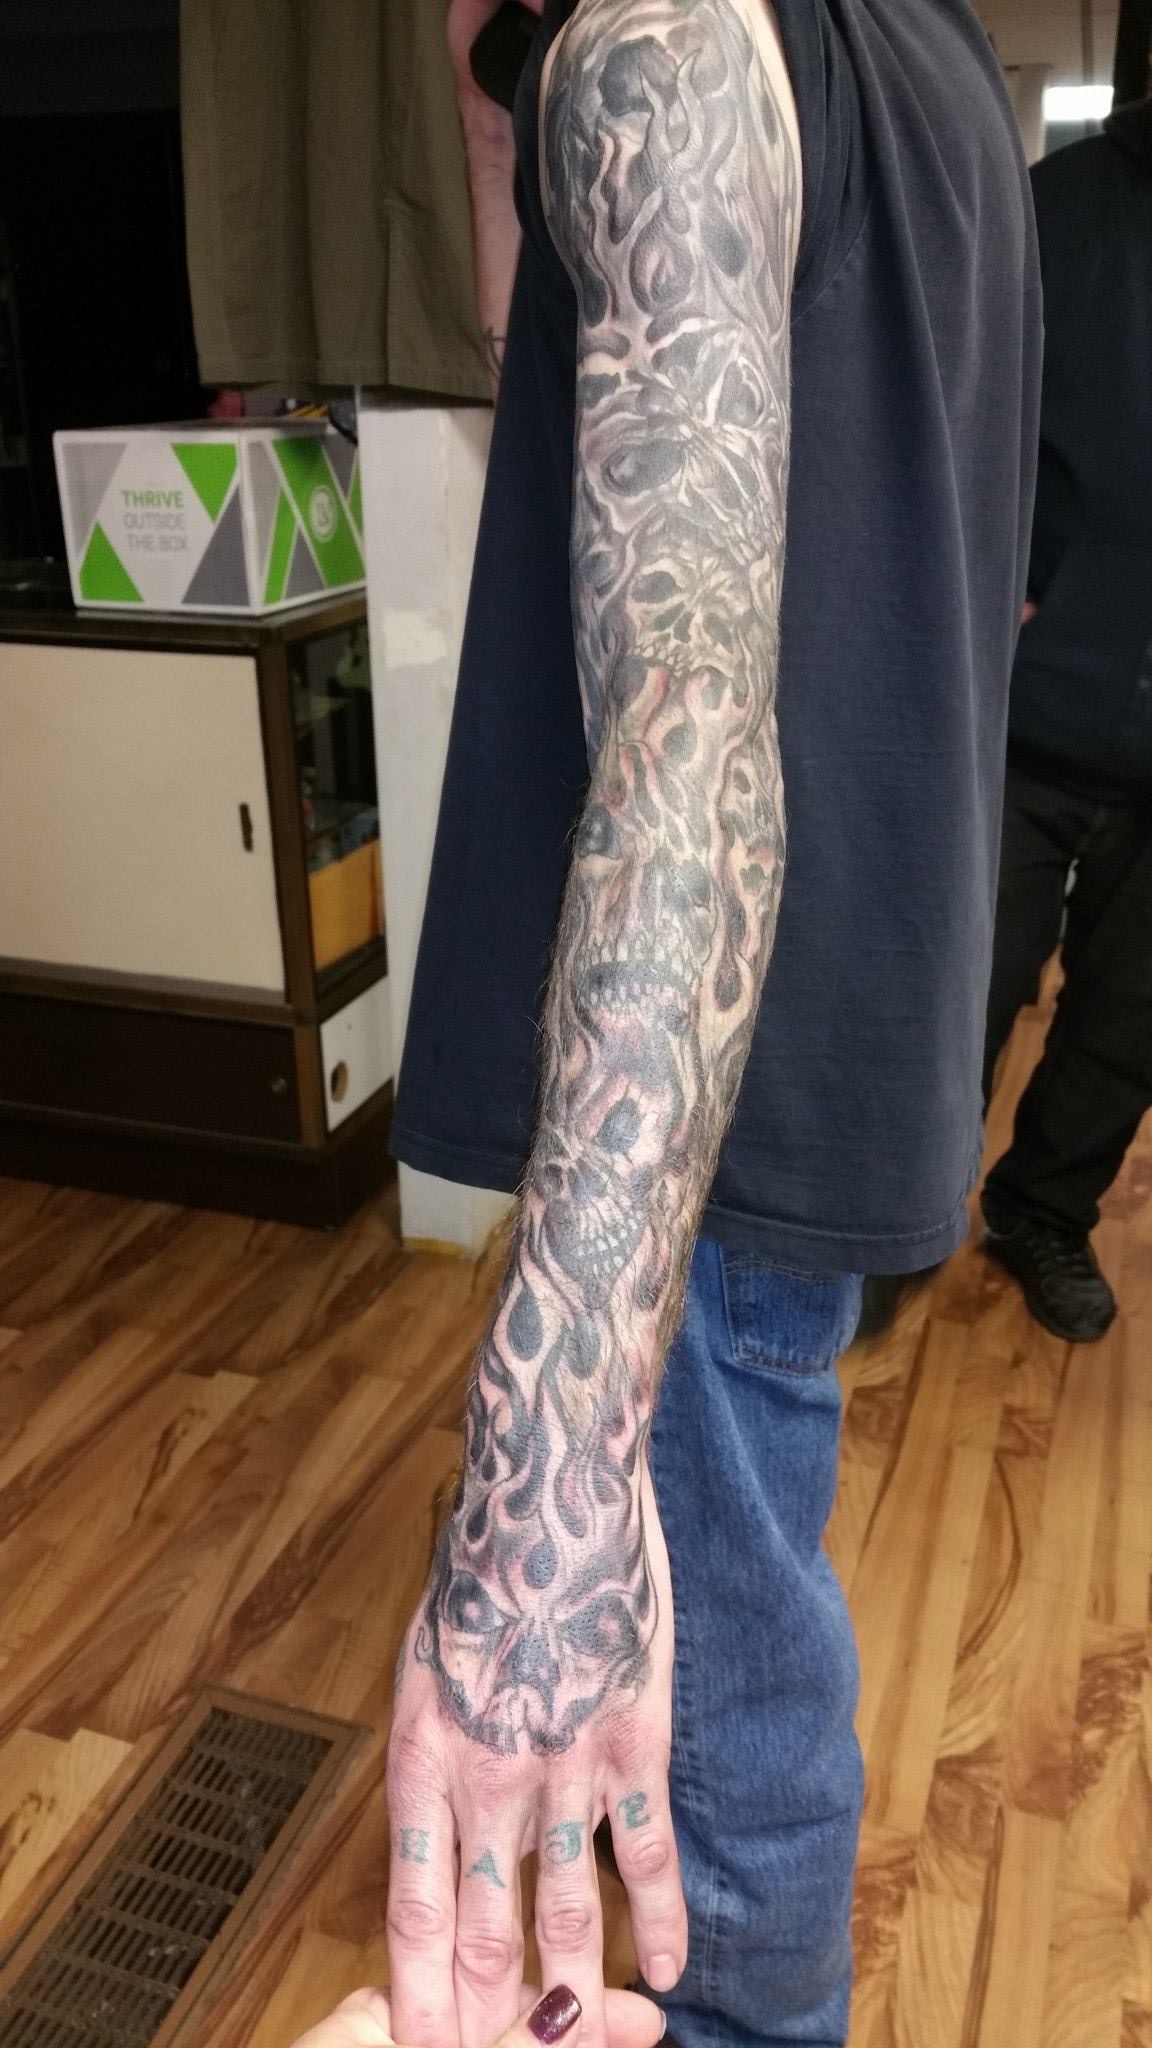 Tattoo all along a man's arm